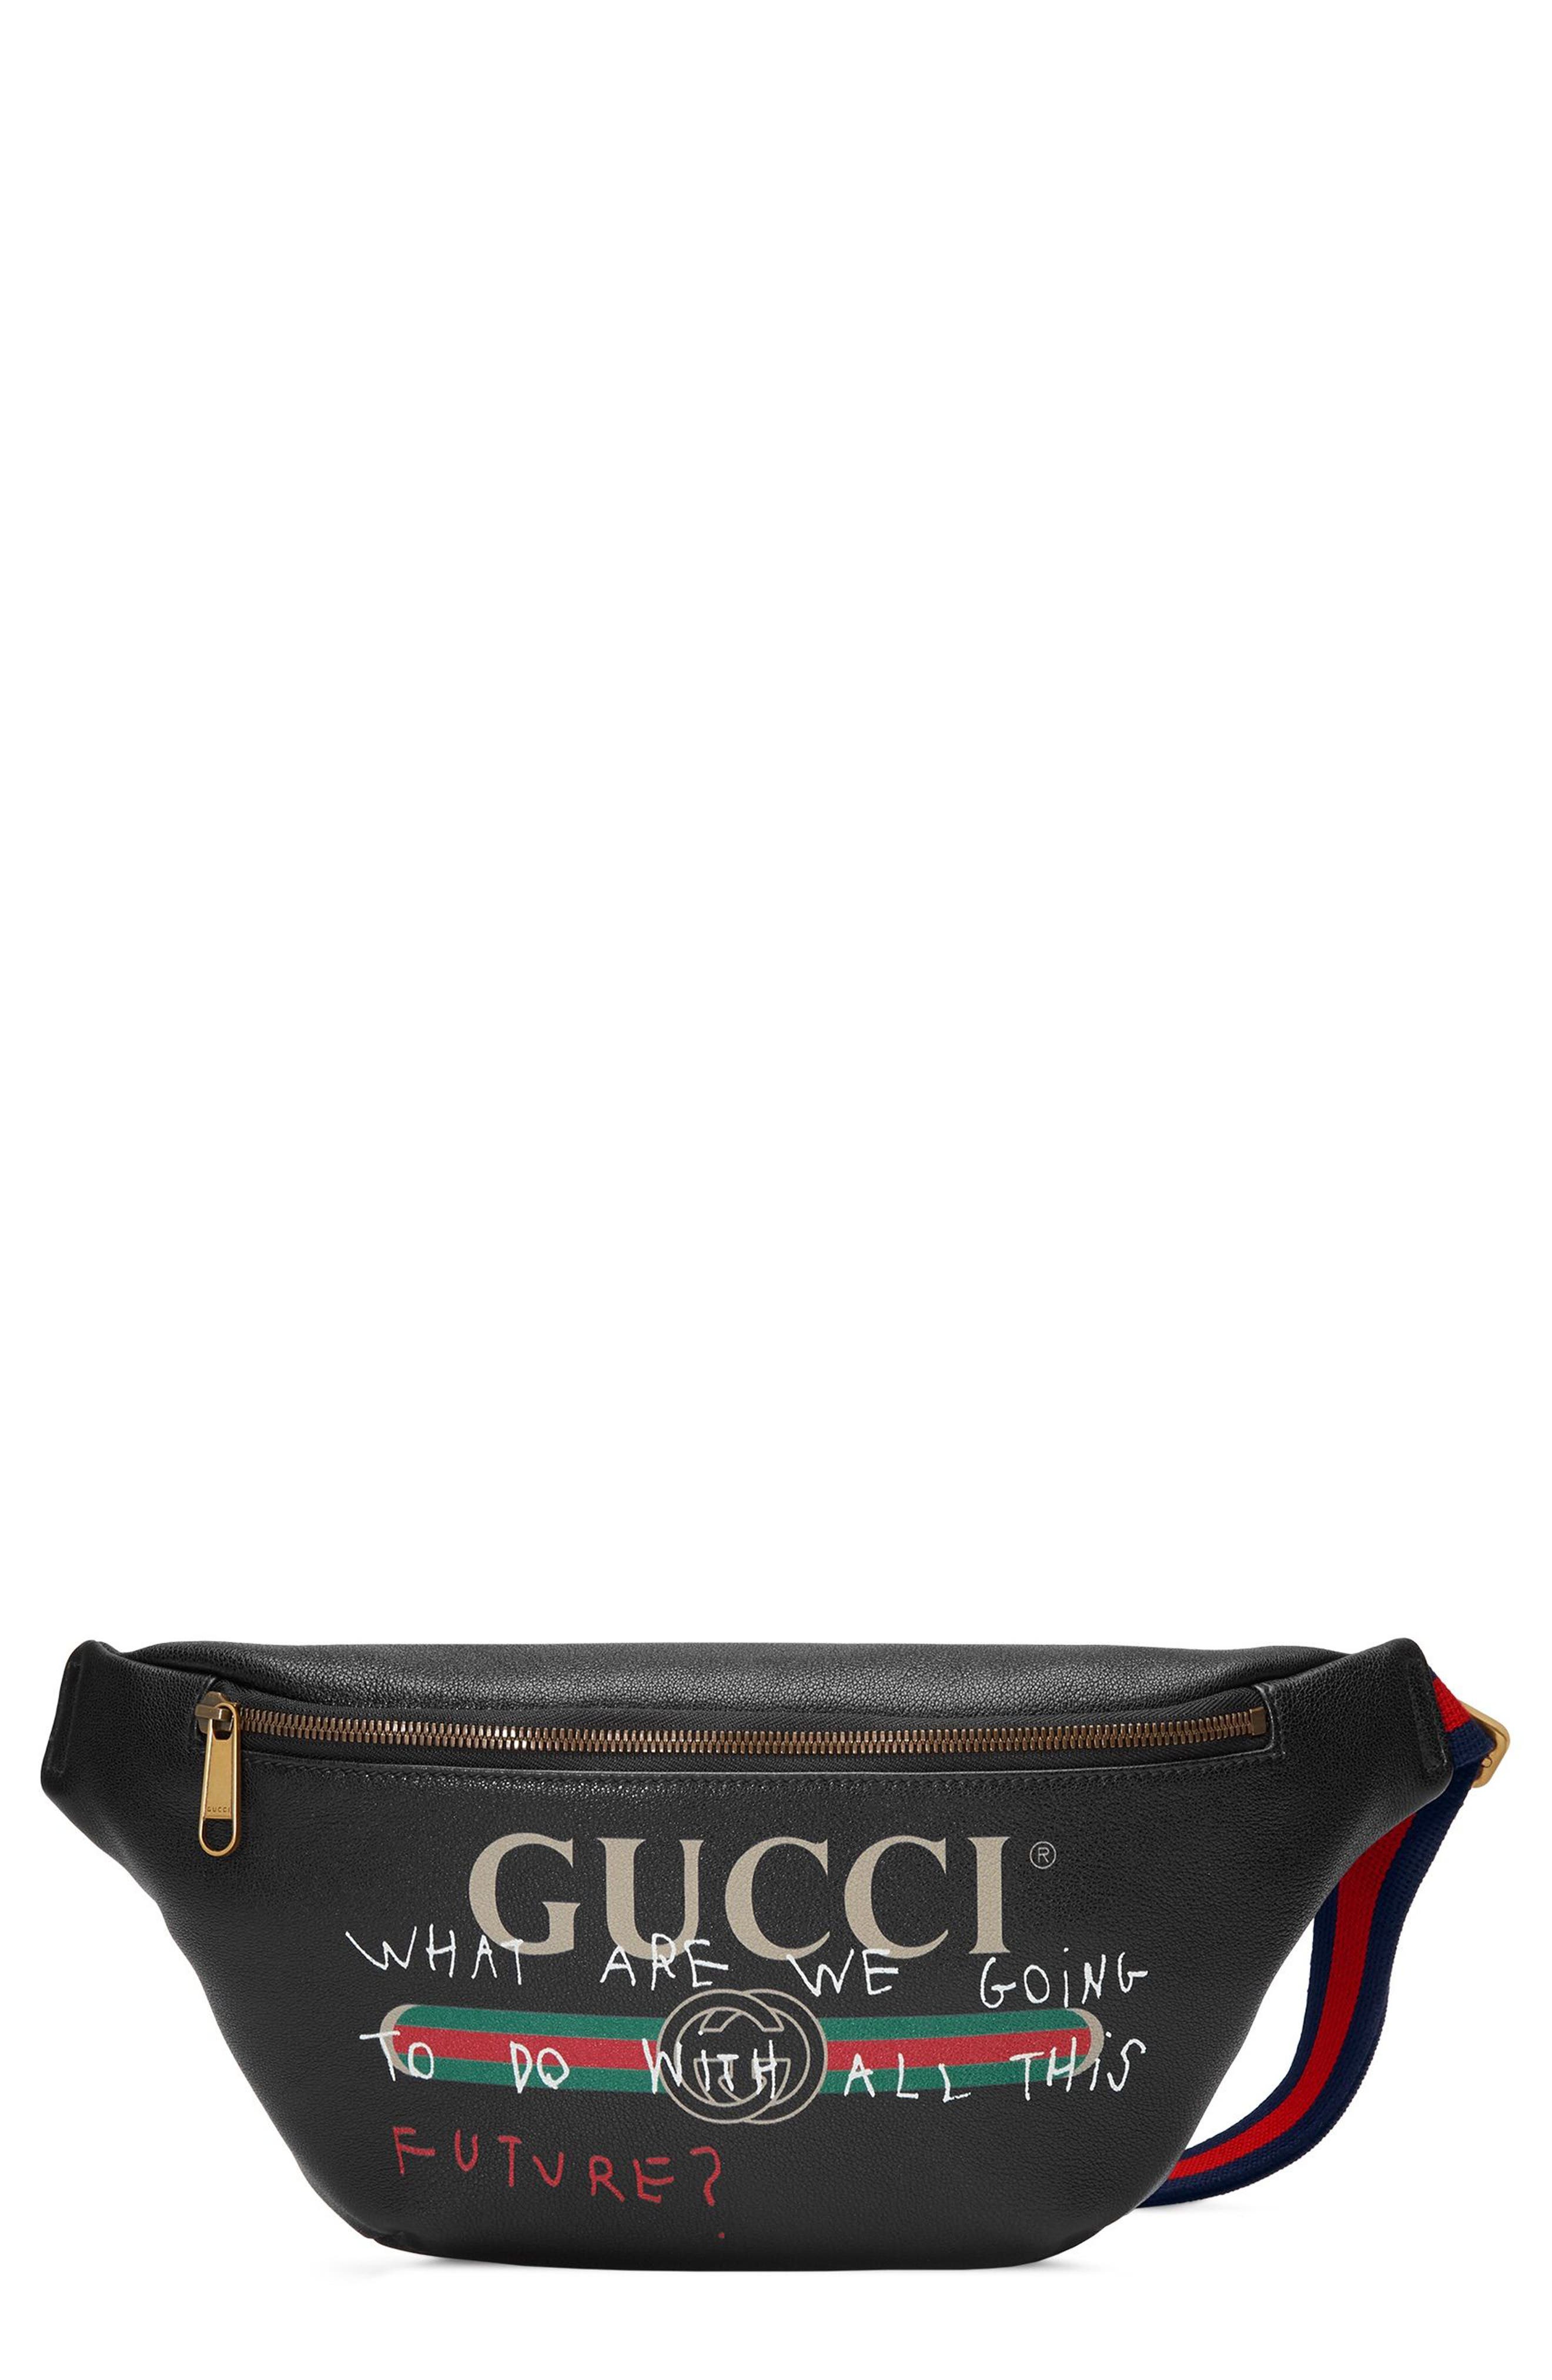 gucci graffiti belt